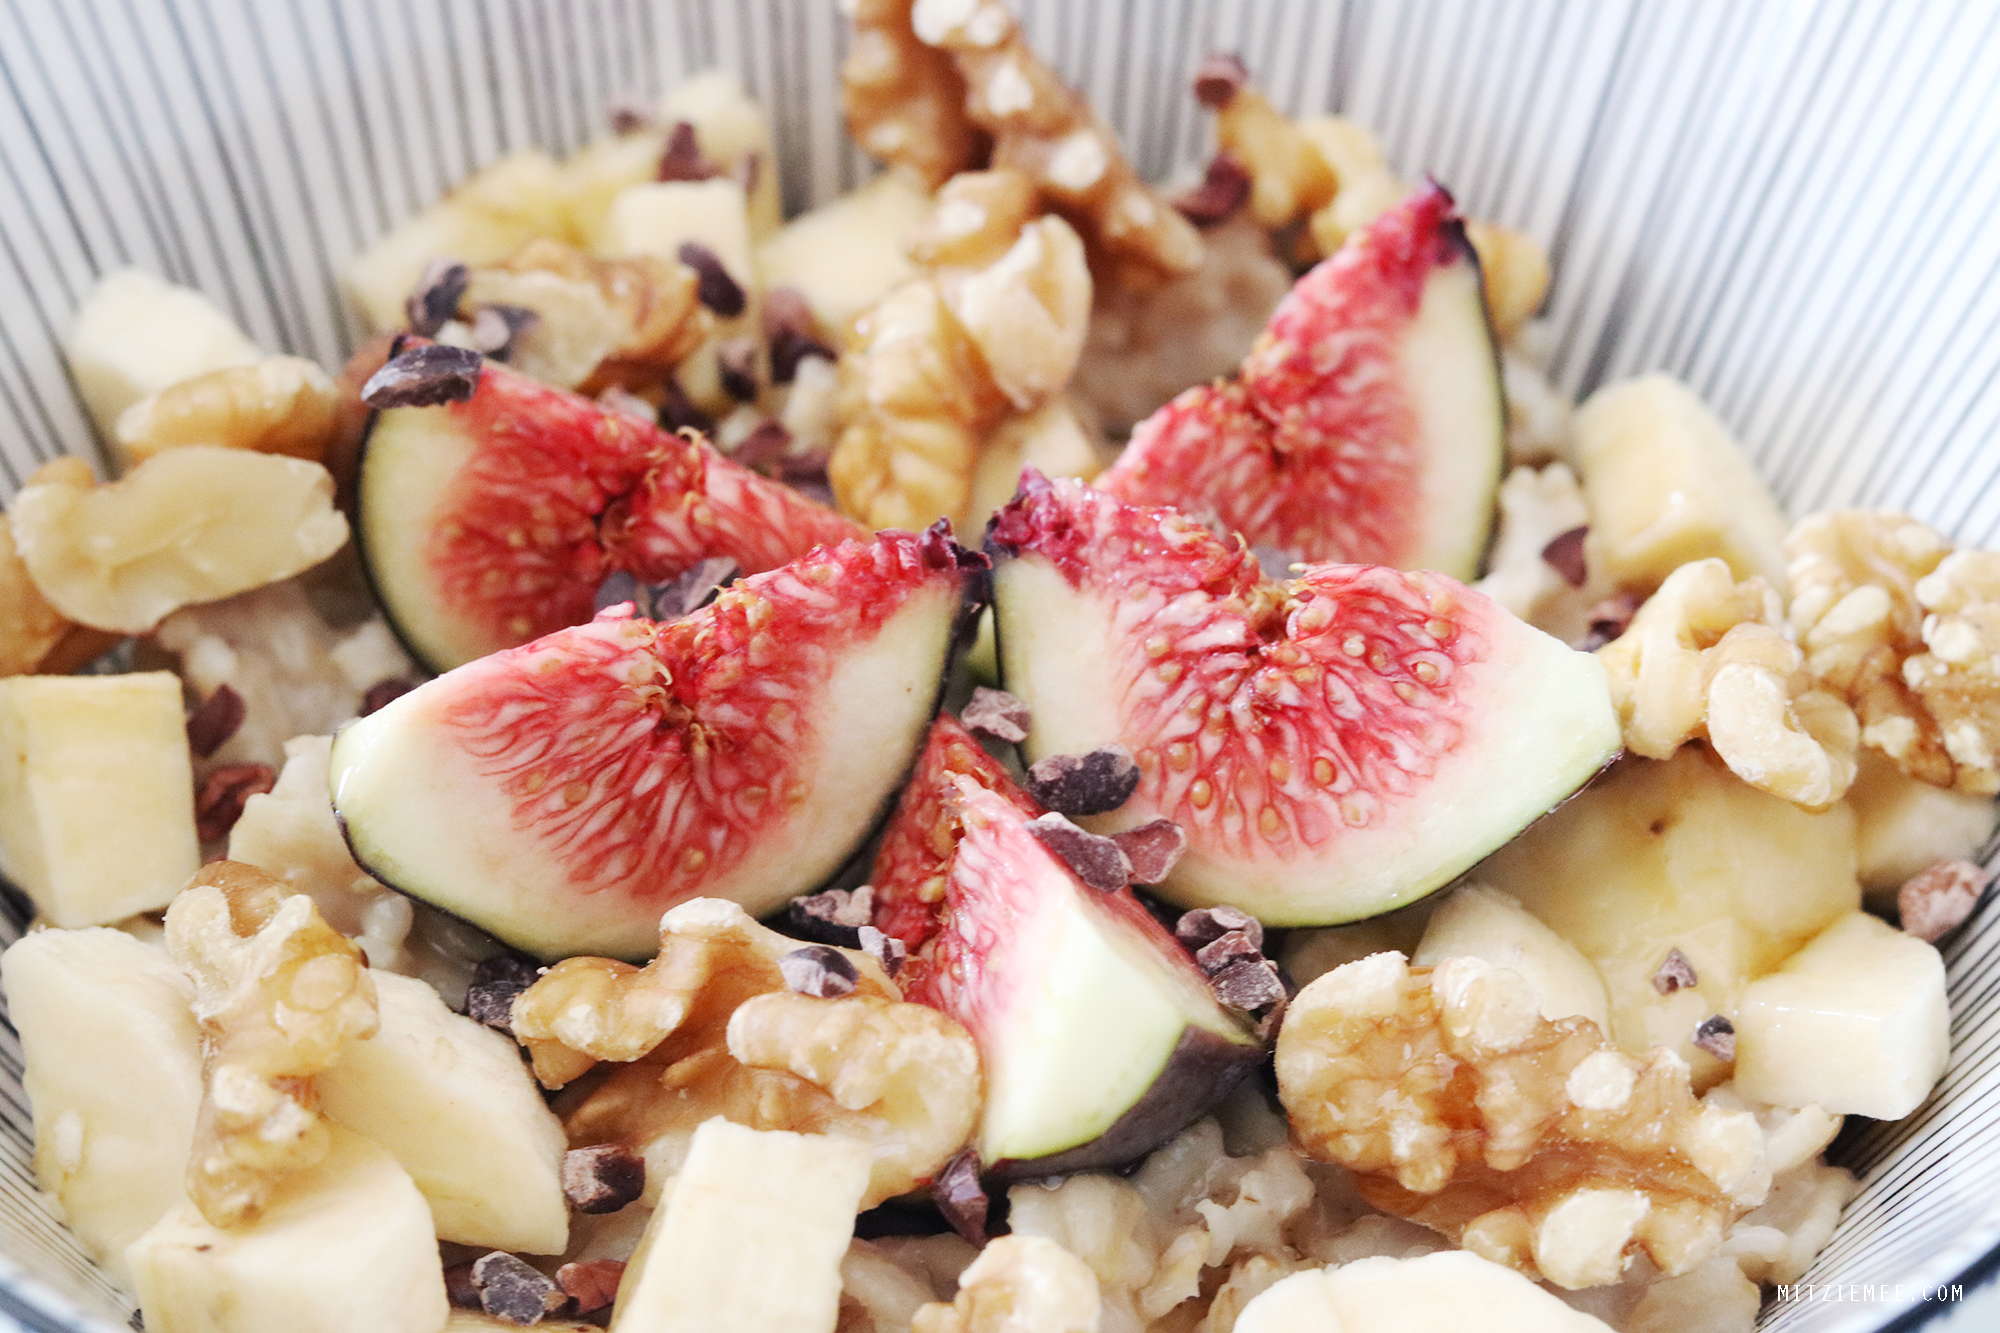 Oatmeal with almond milk - Breakfast Recipe | Mitzie Mee